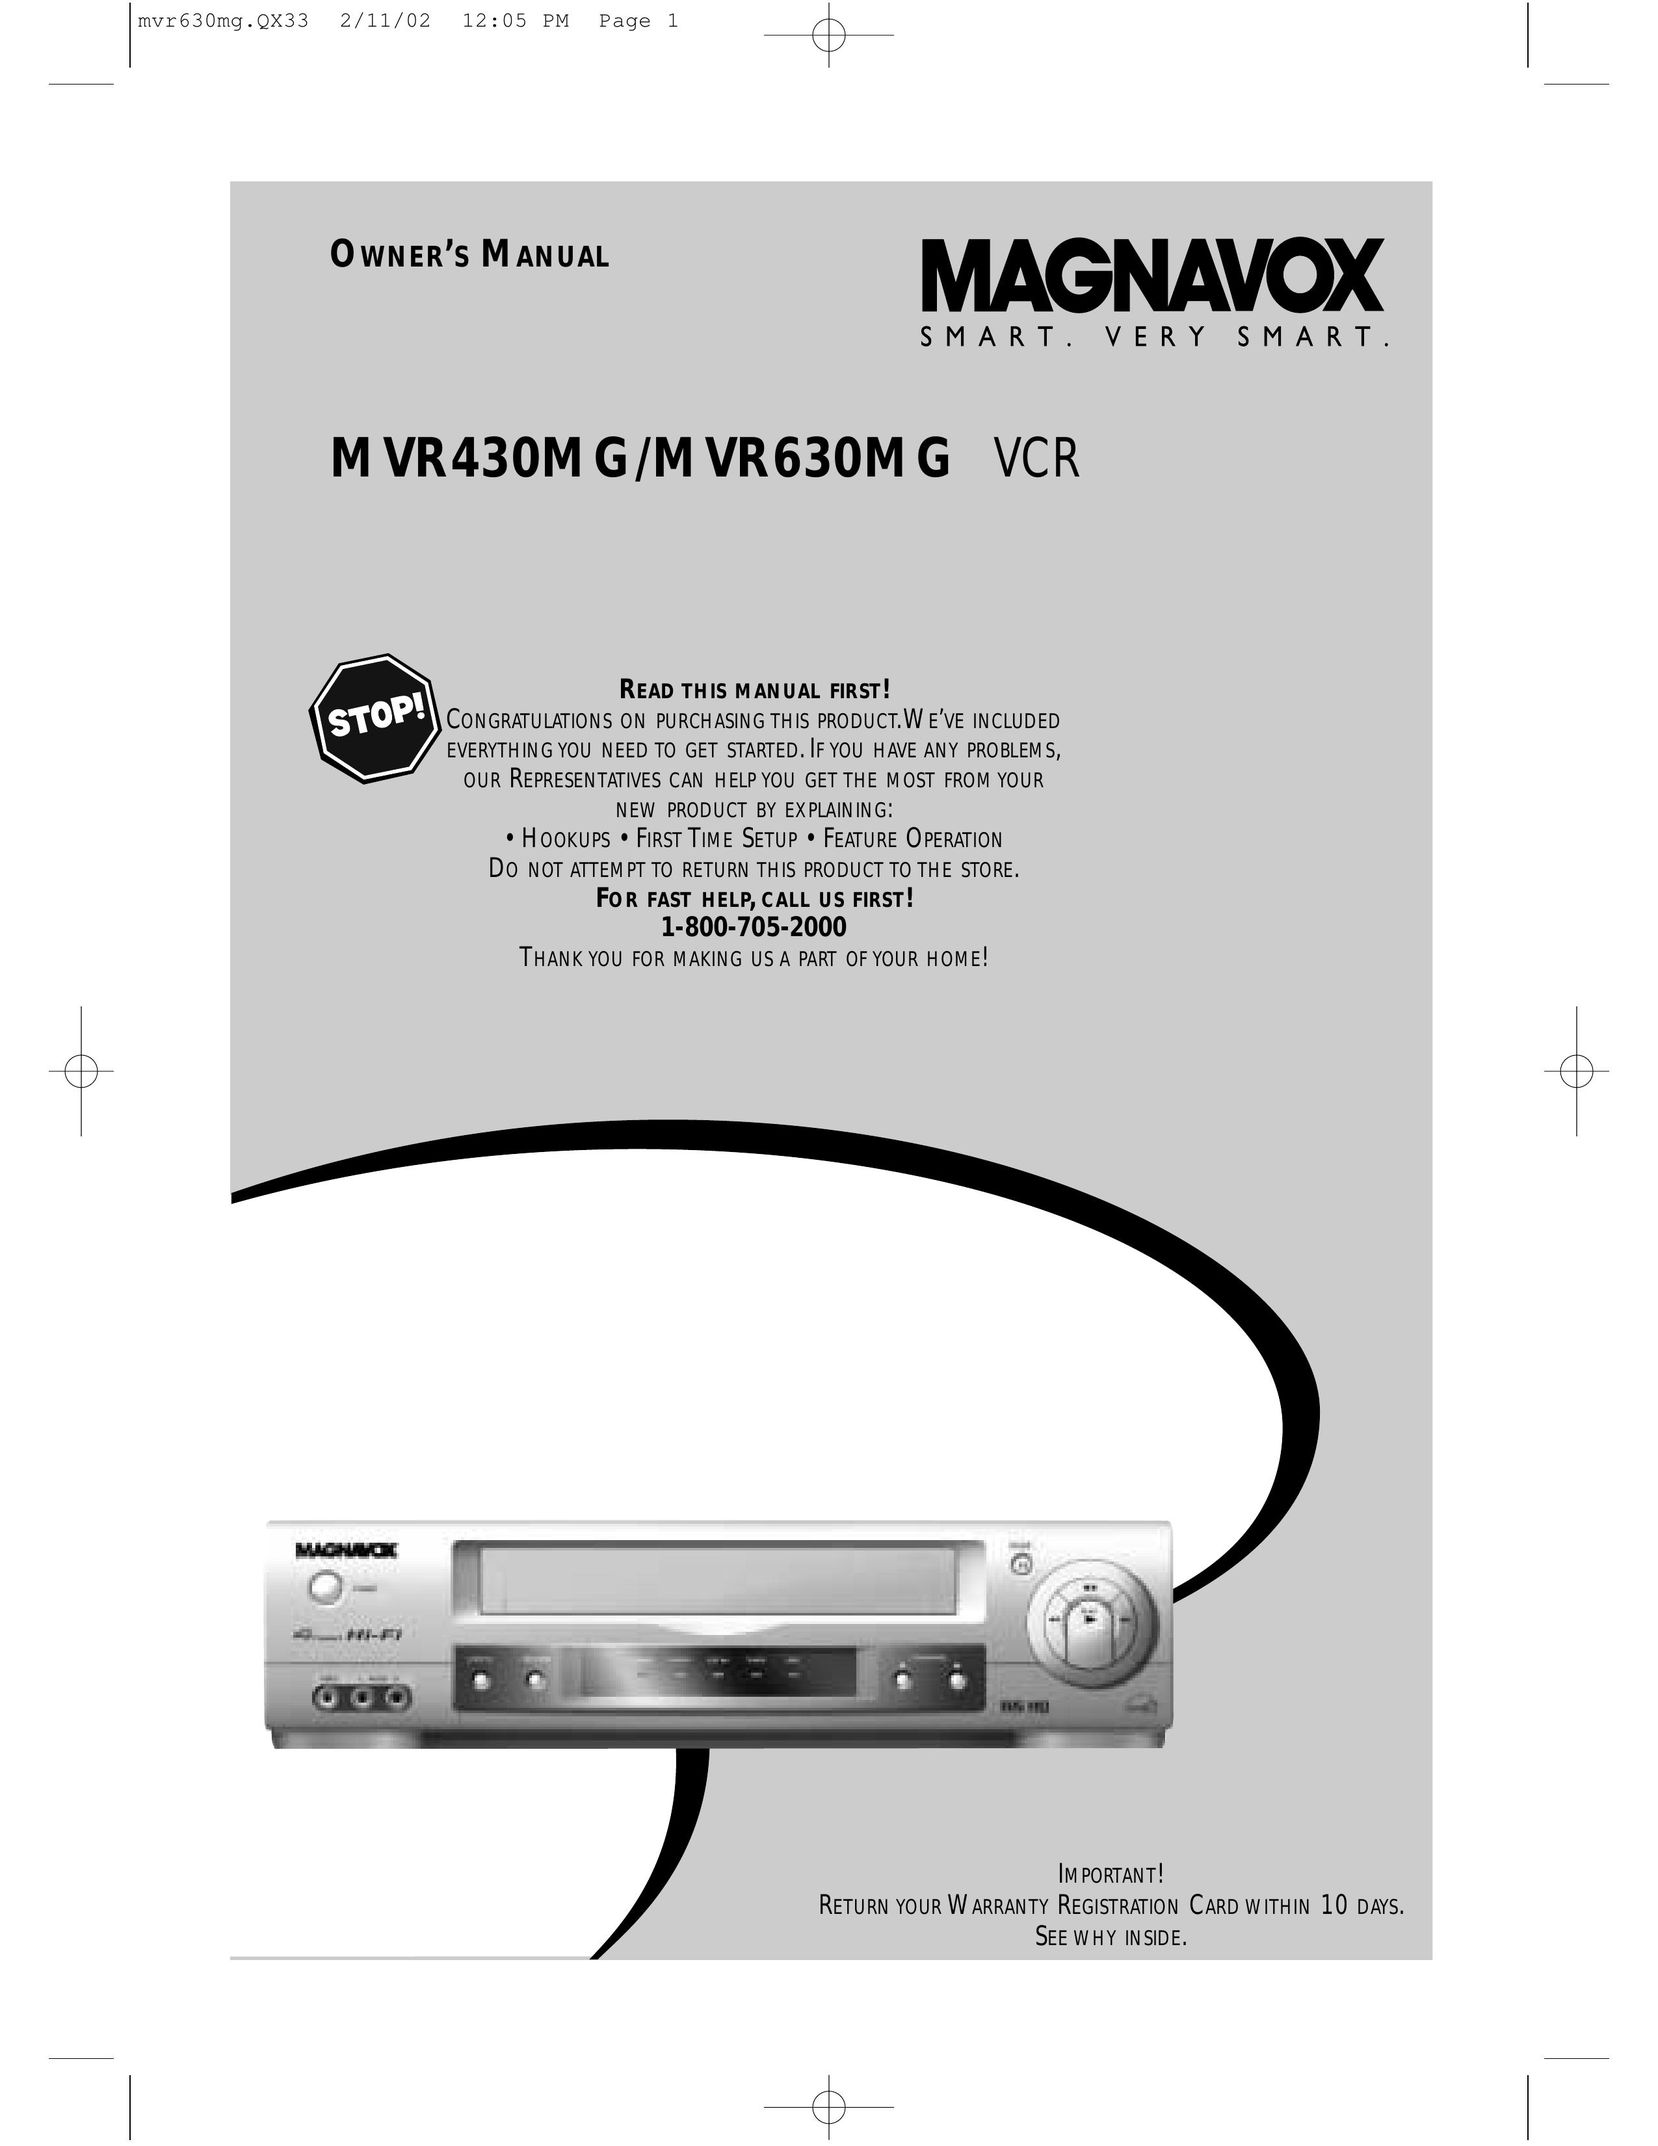 Magnavox MVR630MG VCR User Manual